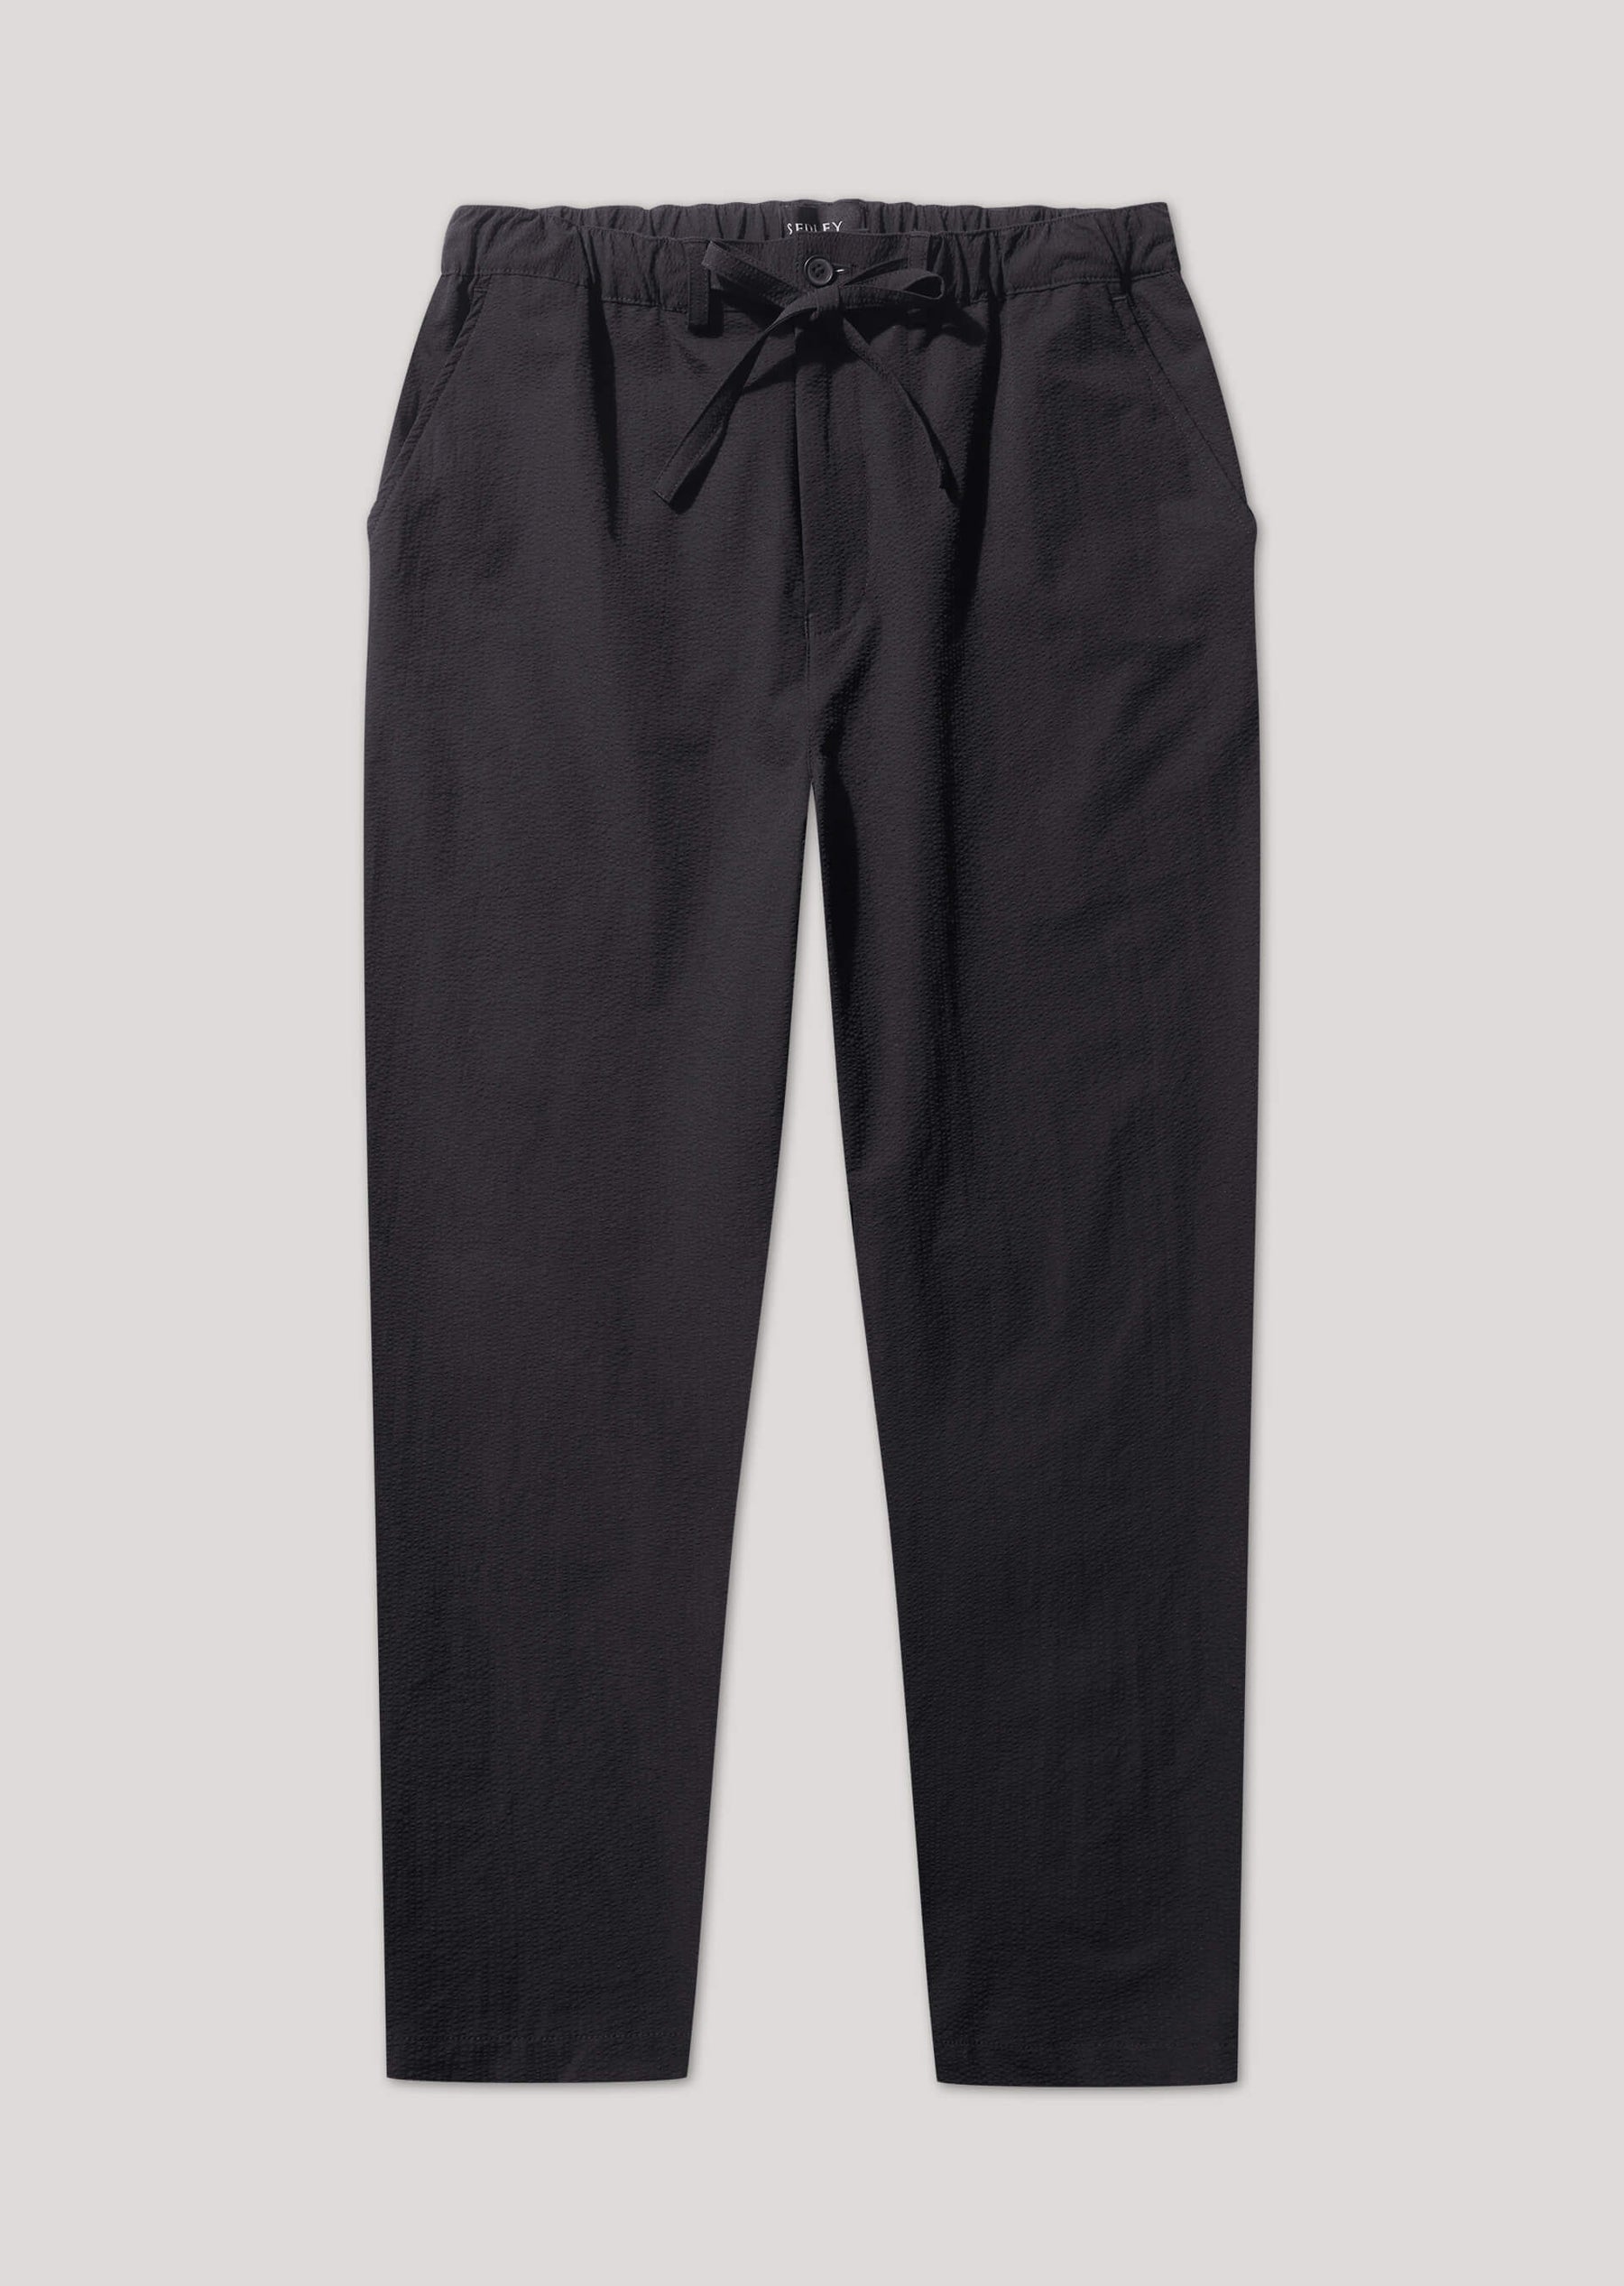 Slack Black Cropped Seersucker Trousers